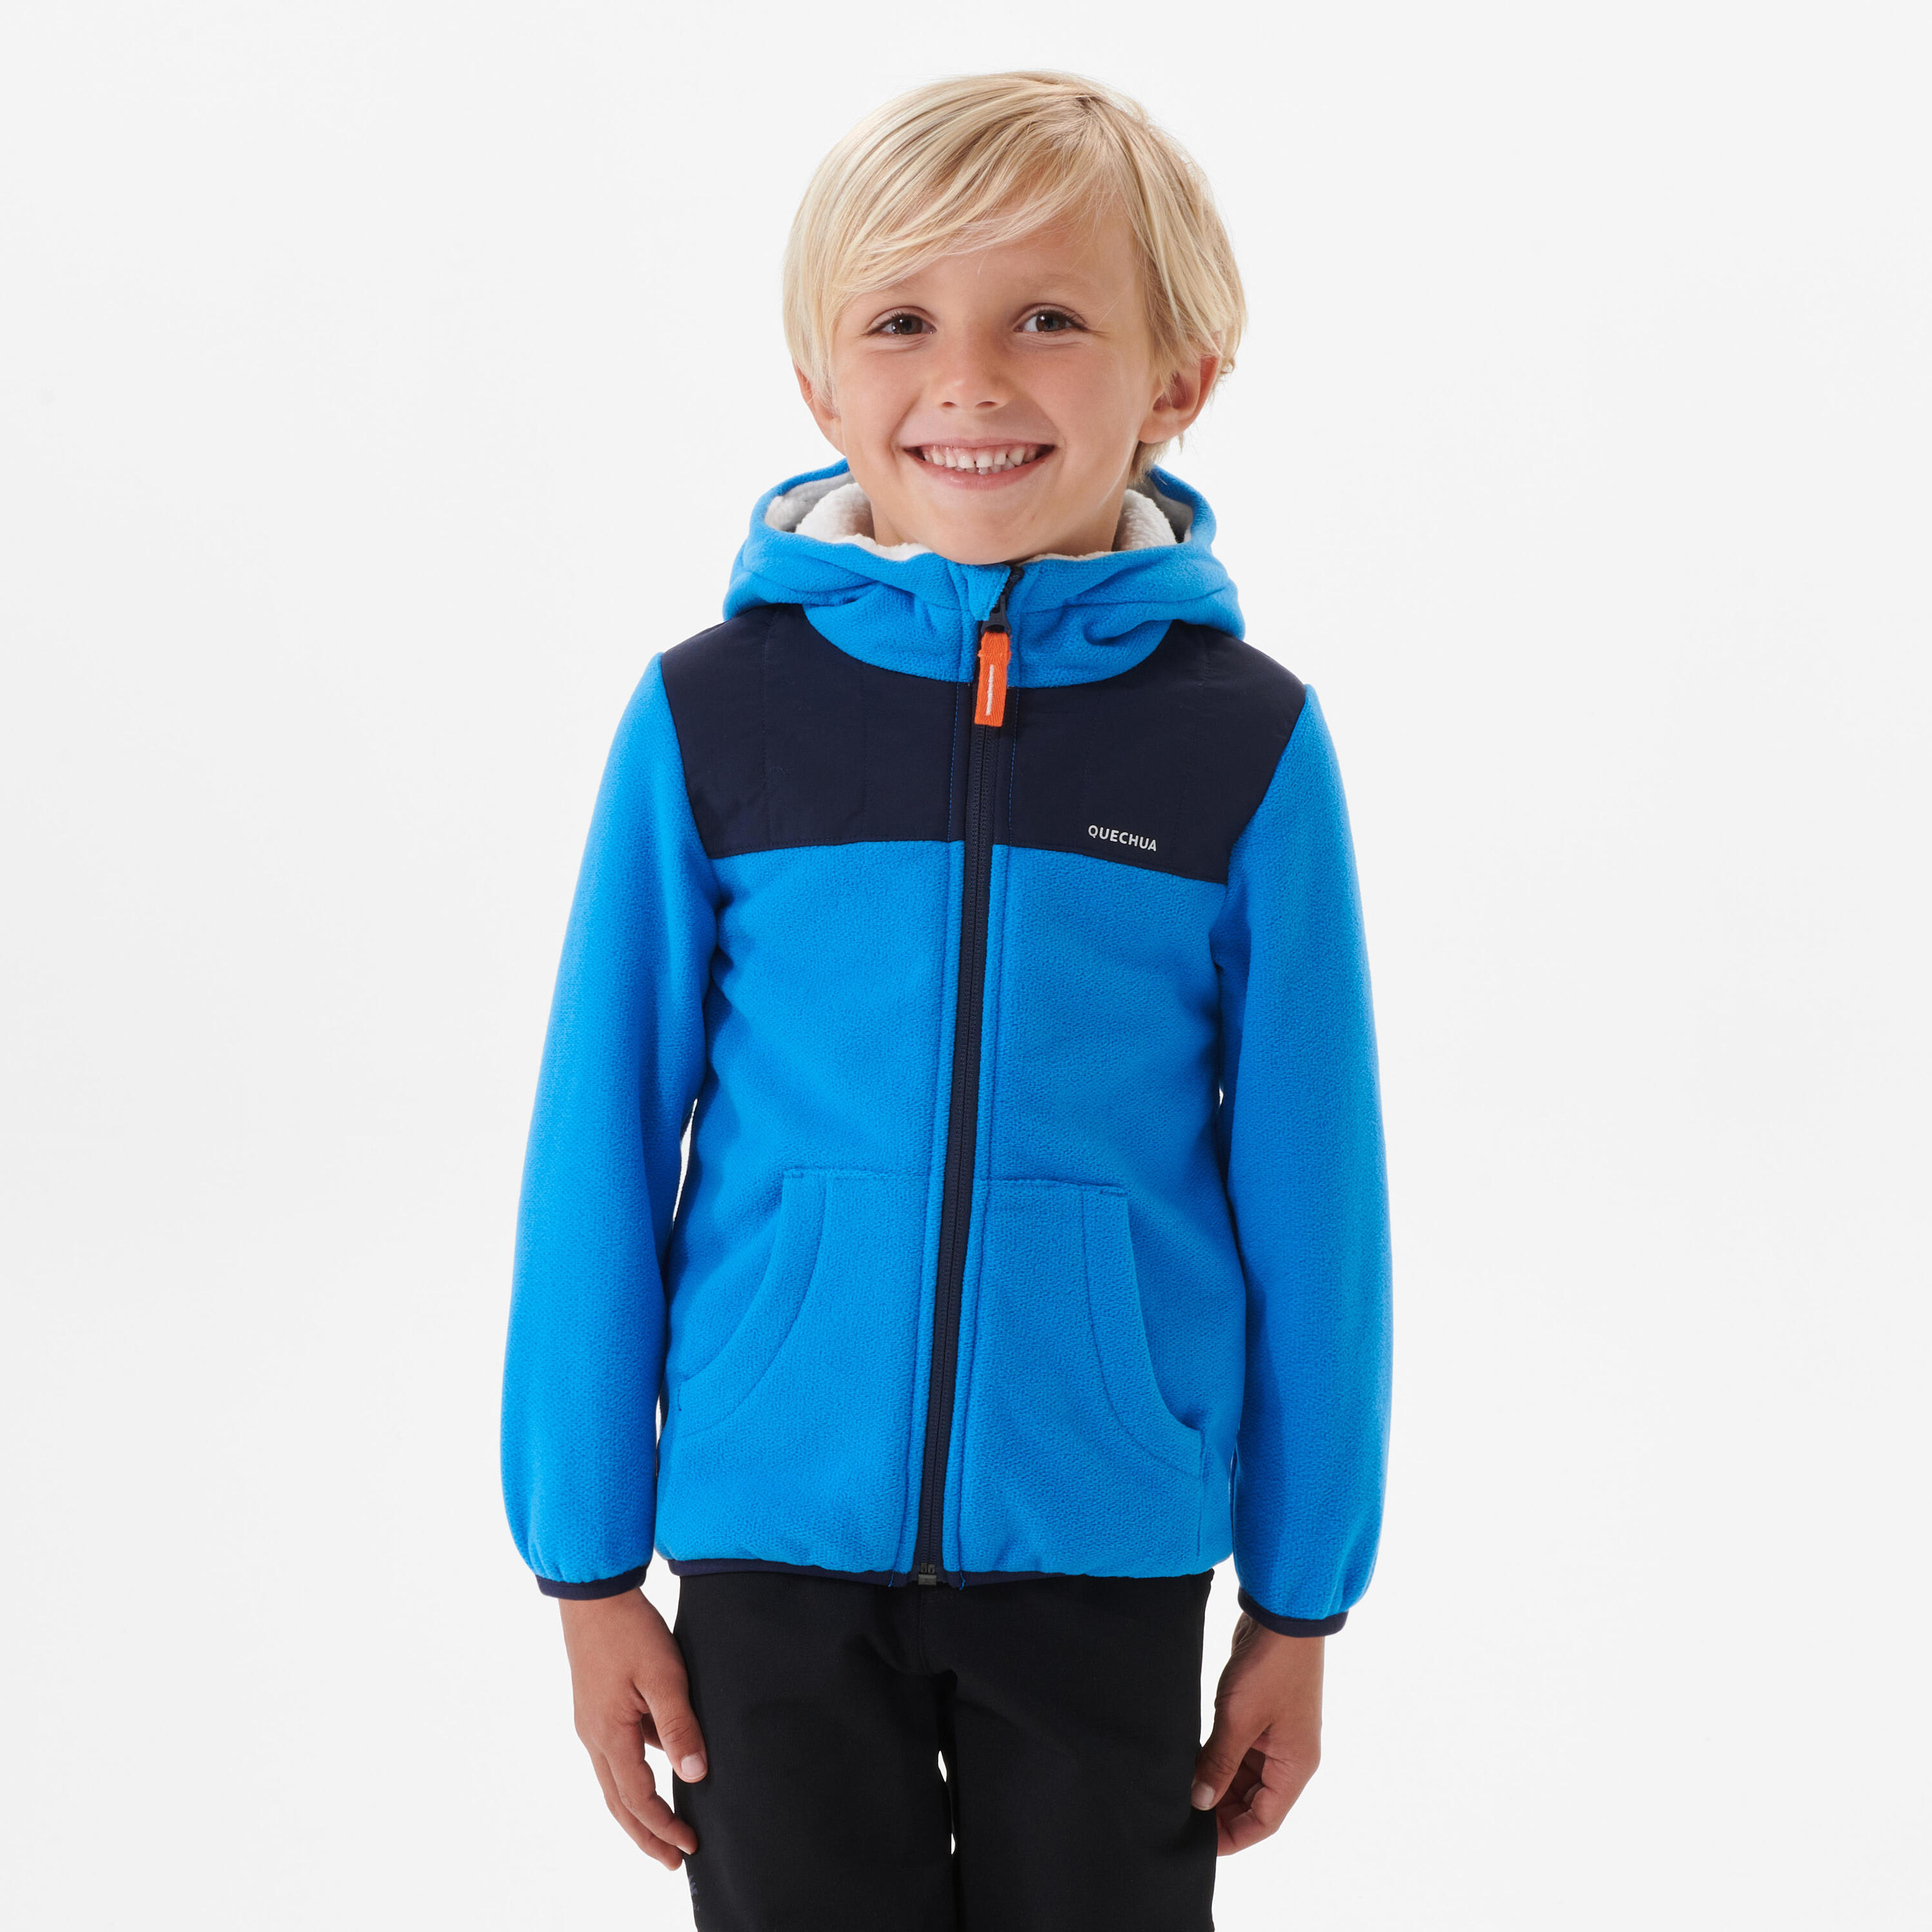 Kids’ Warm Hiking Fleece Jacket - MH500 Aged 2-6 - Blue 2/8